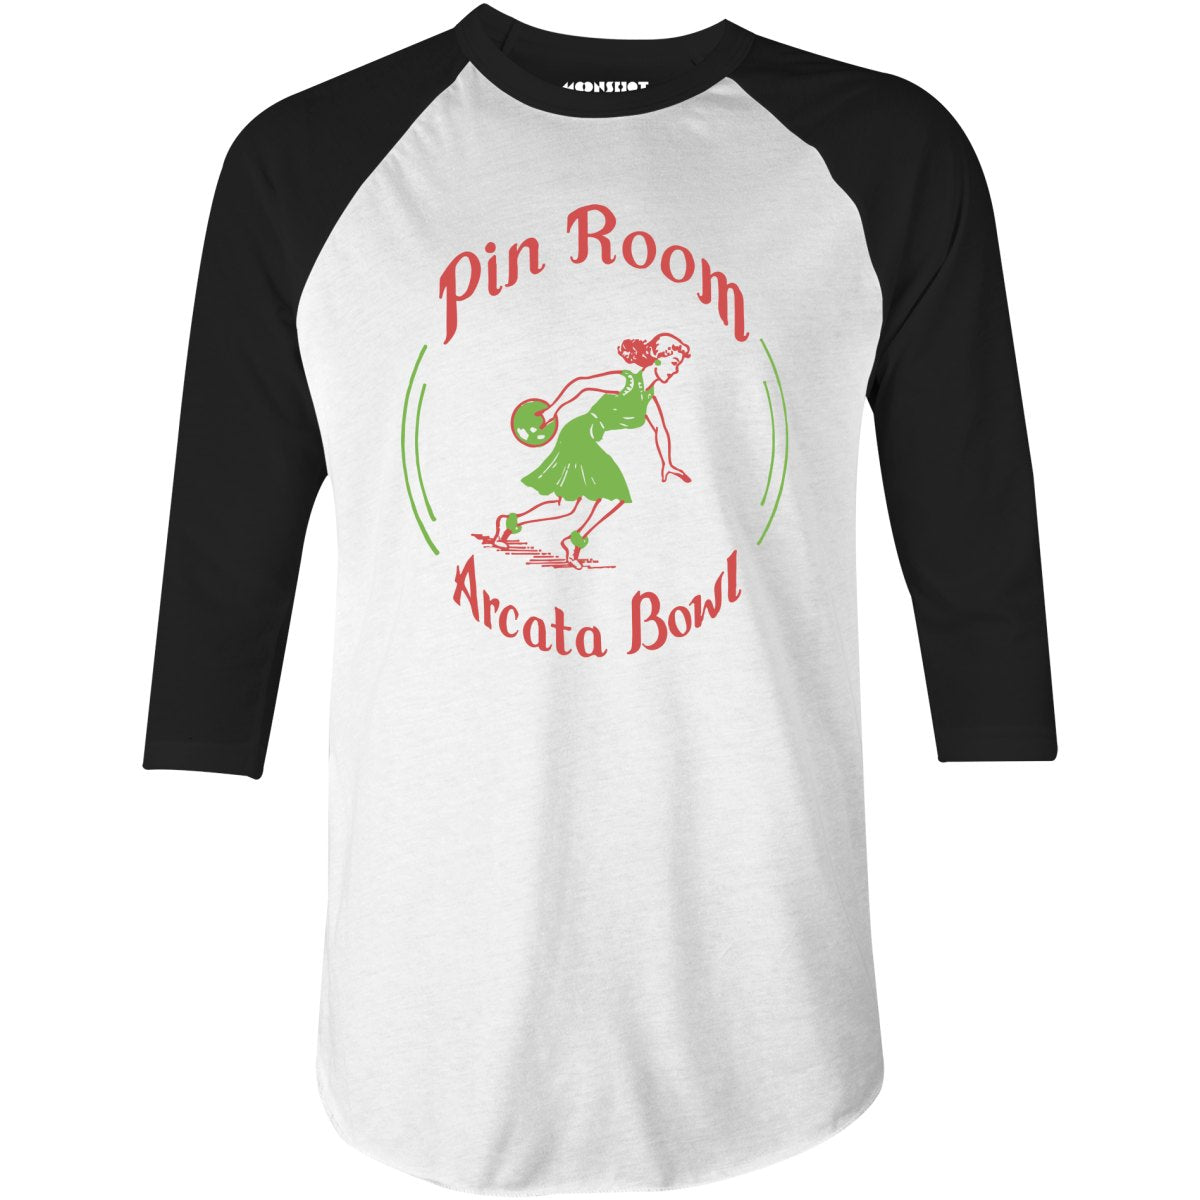 Arcata Bowl Pin Room - Arcata, CA - Vintage Bowling Alley - 3/4 Sleeve Raglan T-Shirt